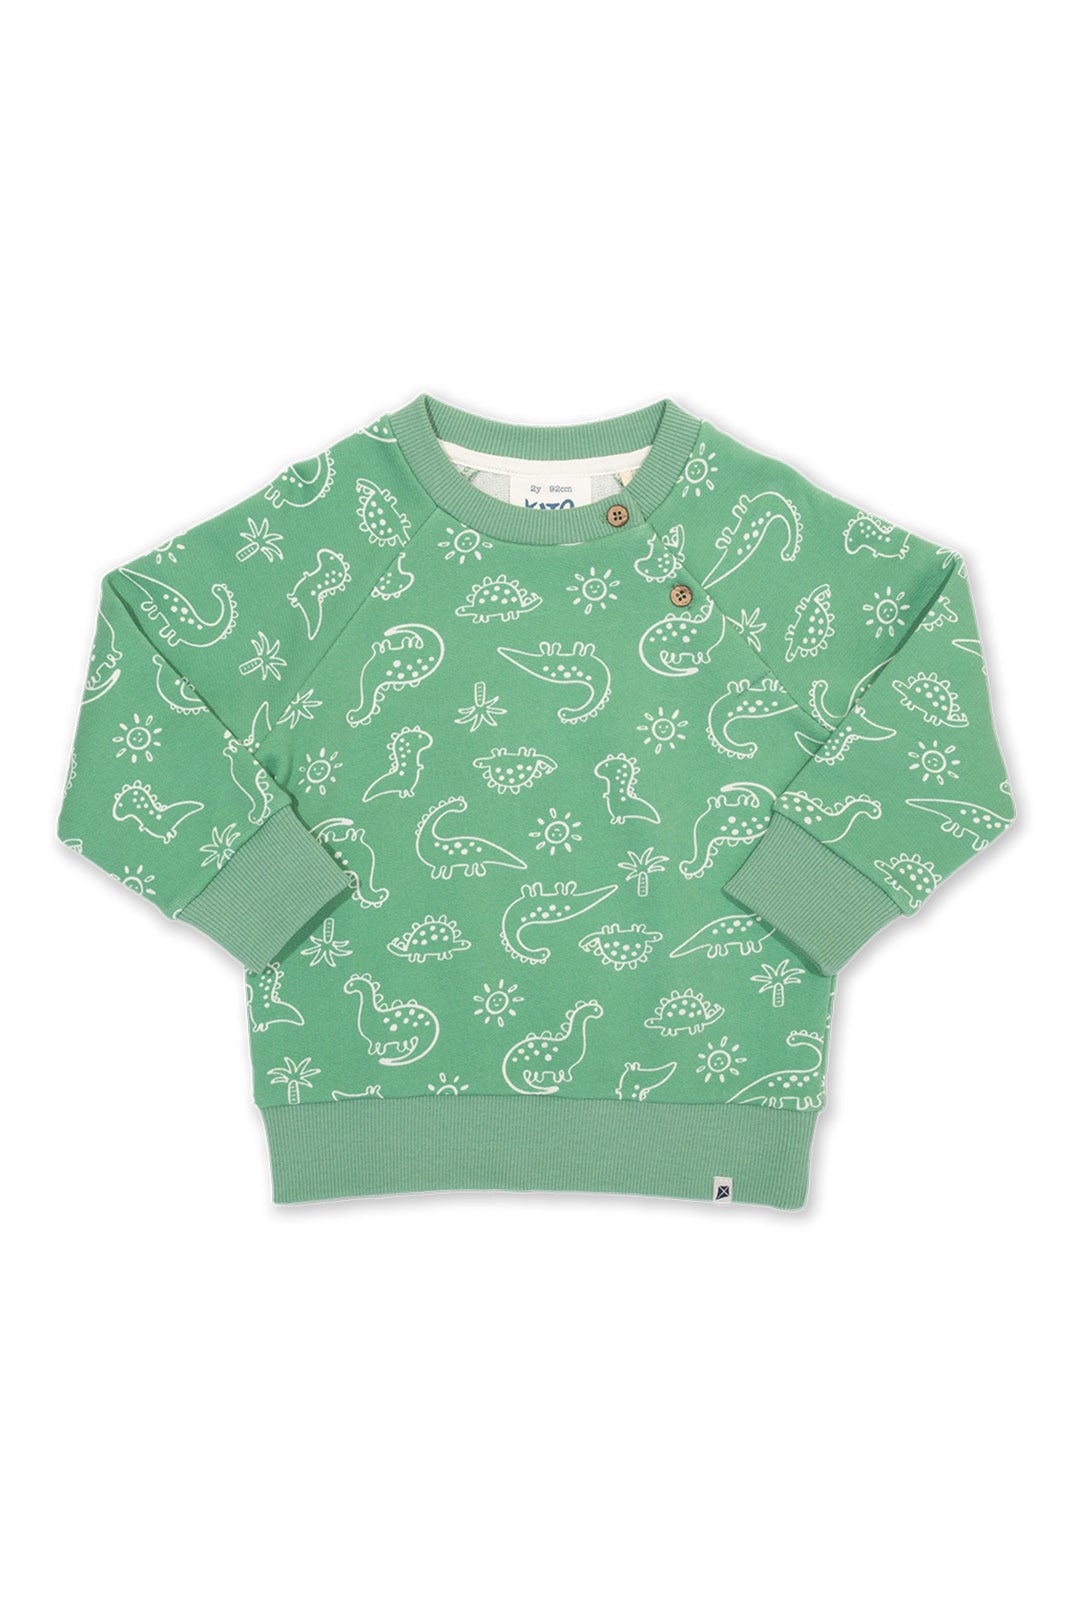 Dino Earth Baby/Kids Organic Cotton Sweatshirt -